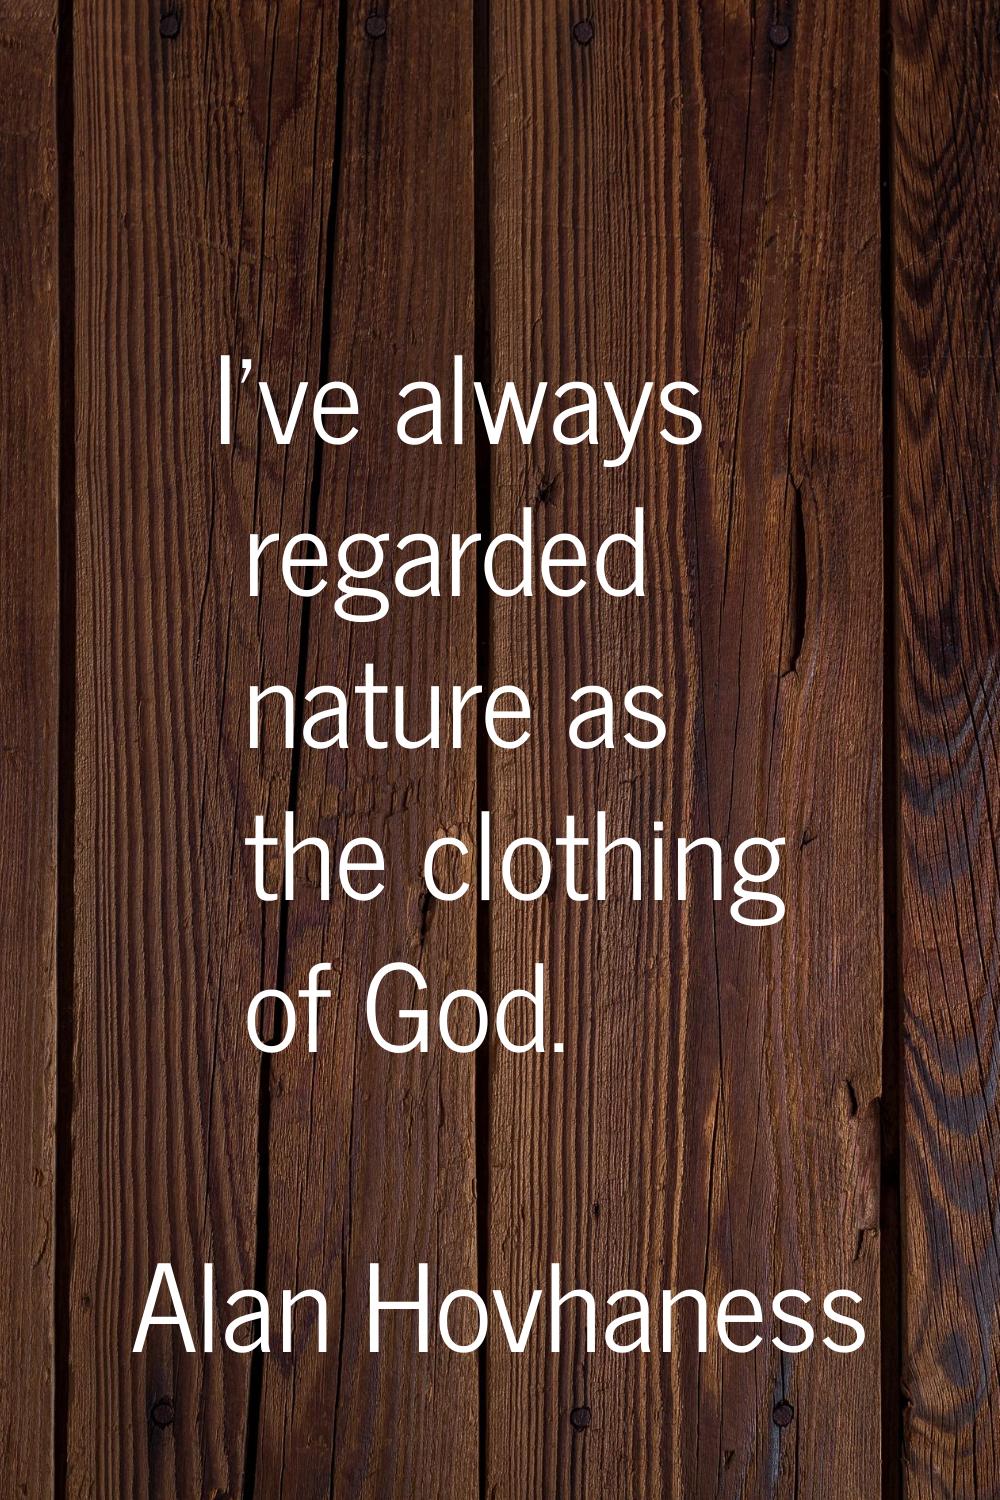 I've always regarded nature as the clothing of God.